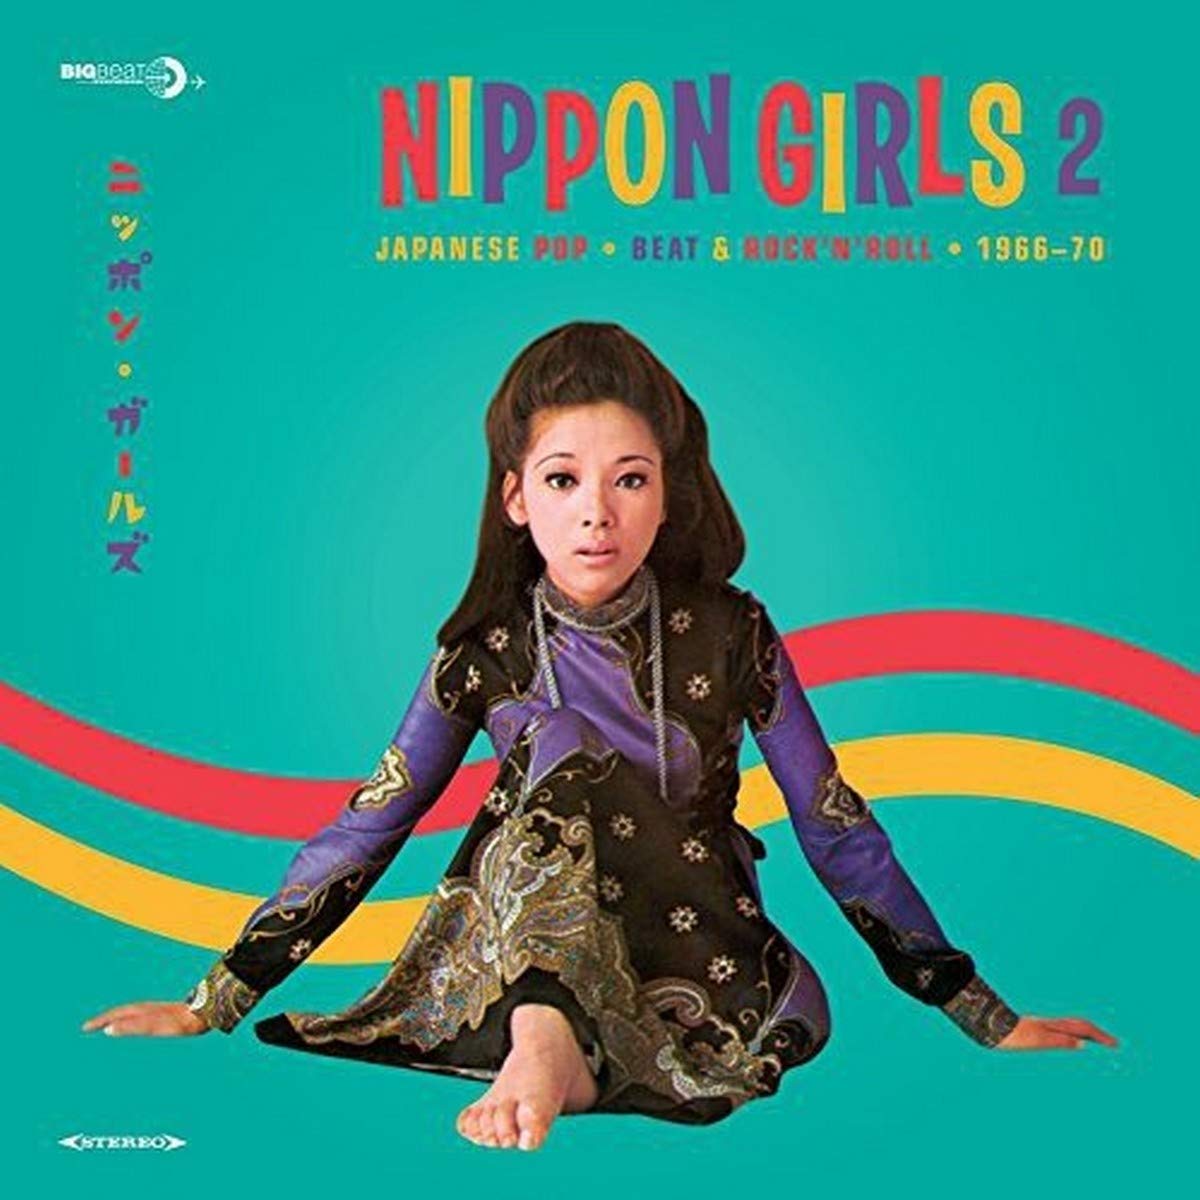 V_A - NIPPON GIRLS 2 (JAPANESE POP, BEAT & ROCK'N'ROLL 1967_1969) - LP